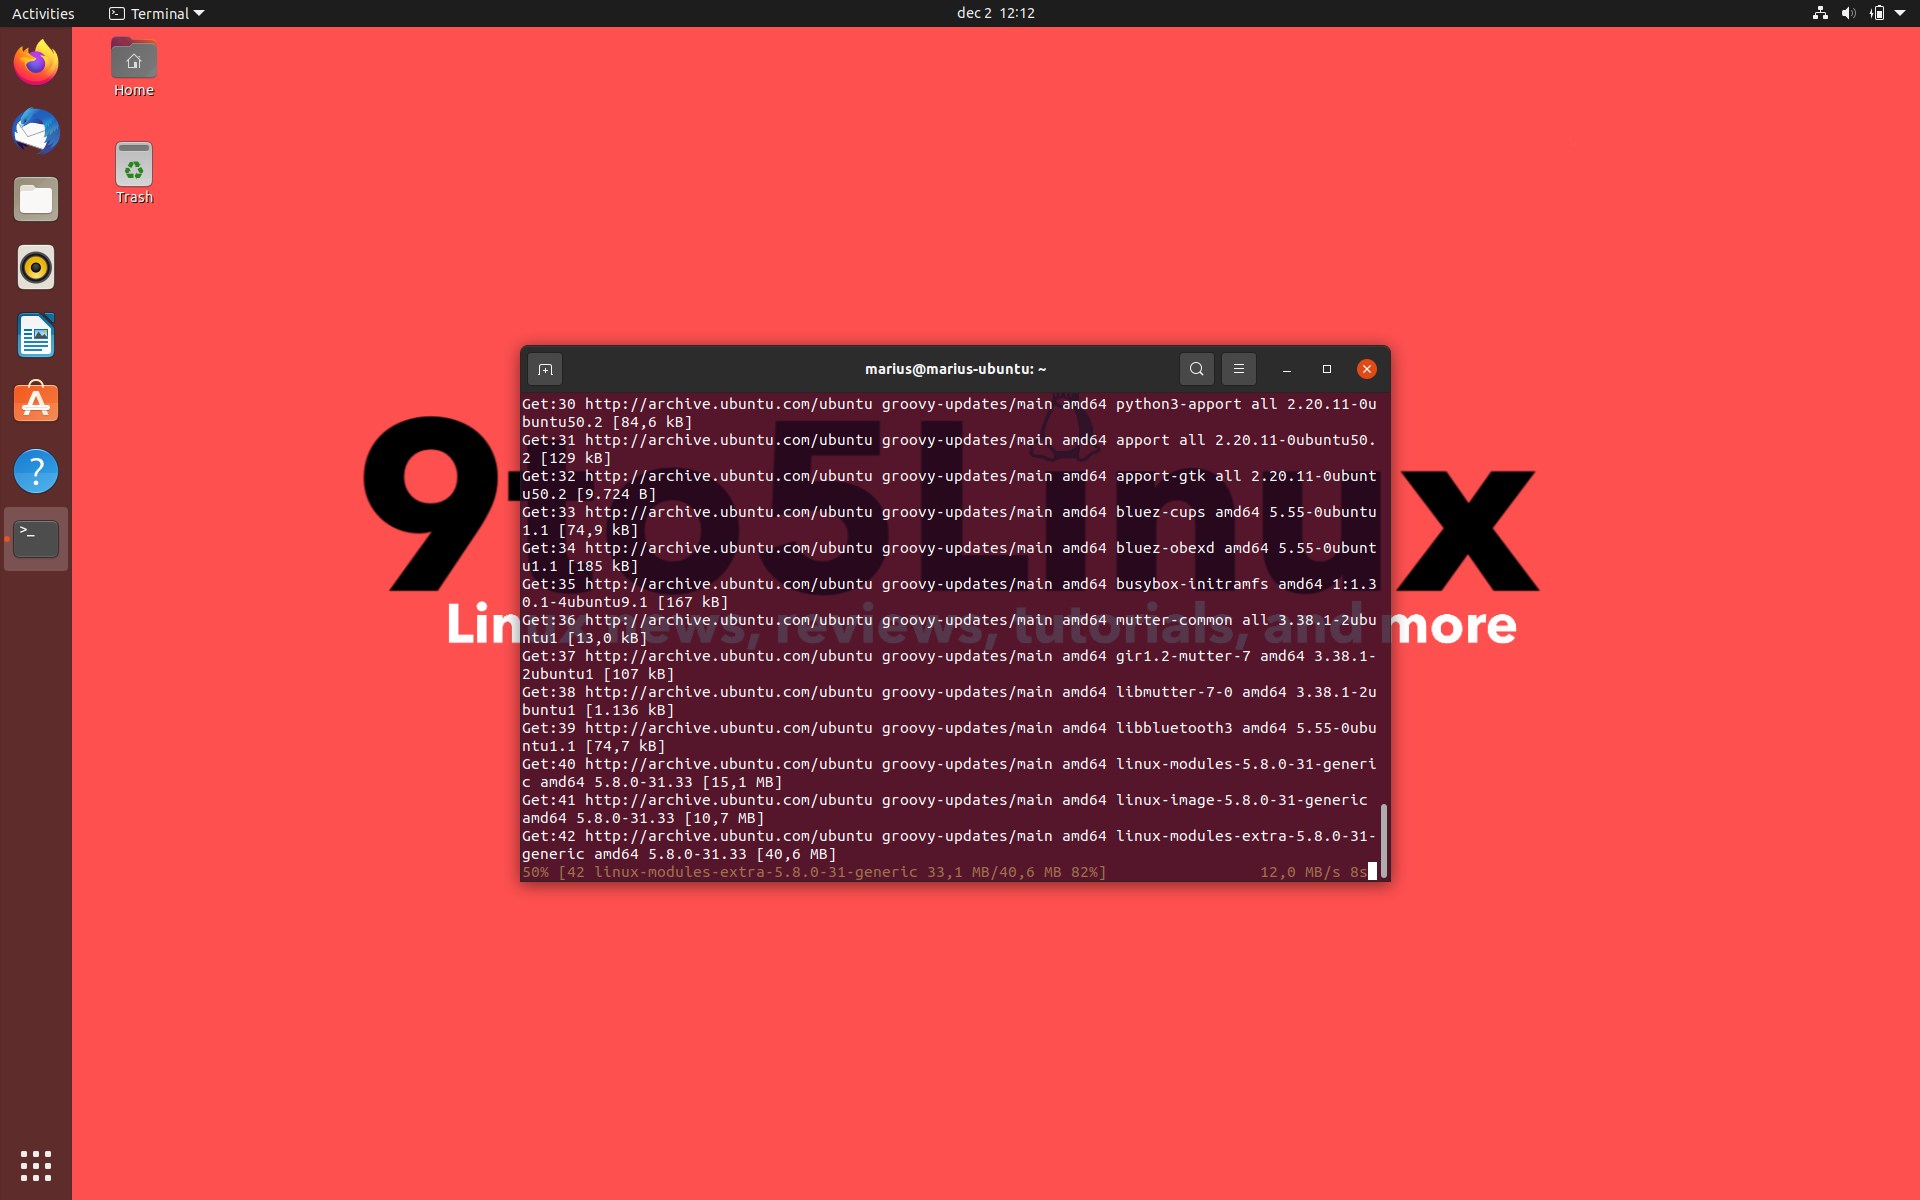 Ubuntu 6220-1: Linux kernel vulnerabilities